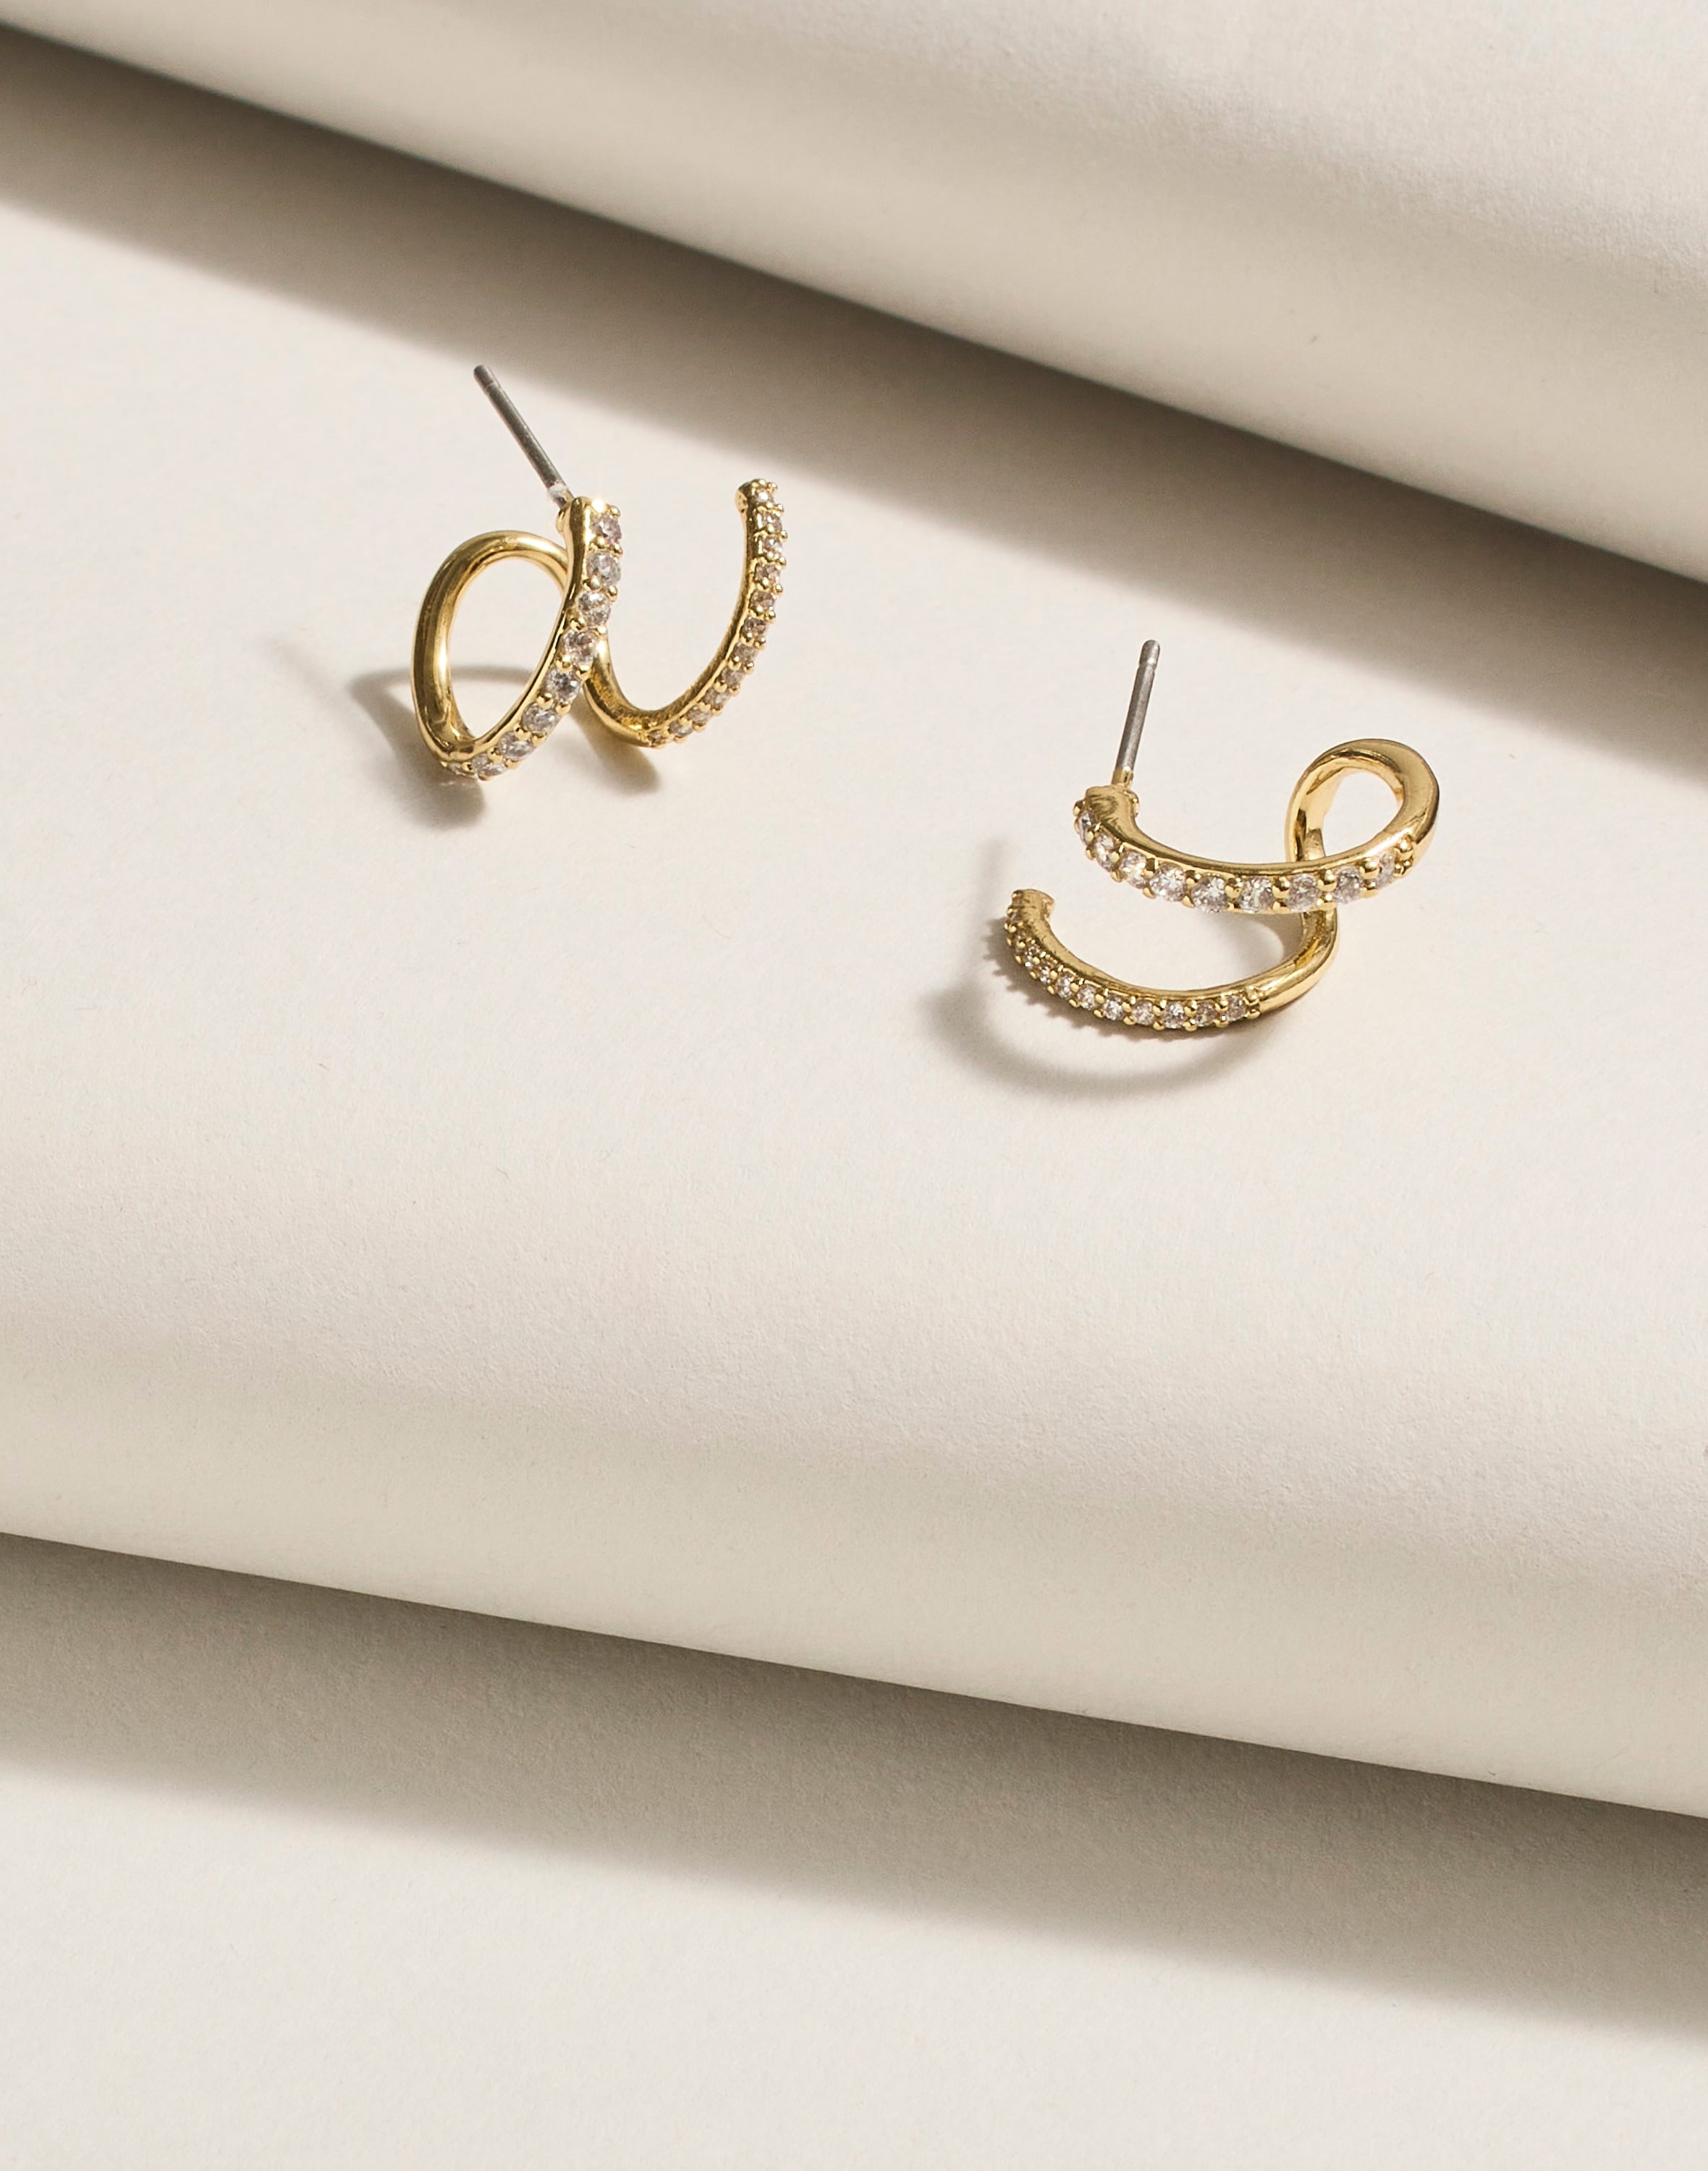 Mw Delicate Collection Demi-fine Pav&eacute; Double Hoop Earrings In Pale Gold